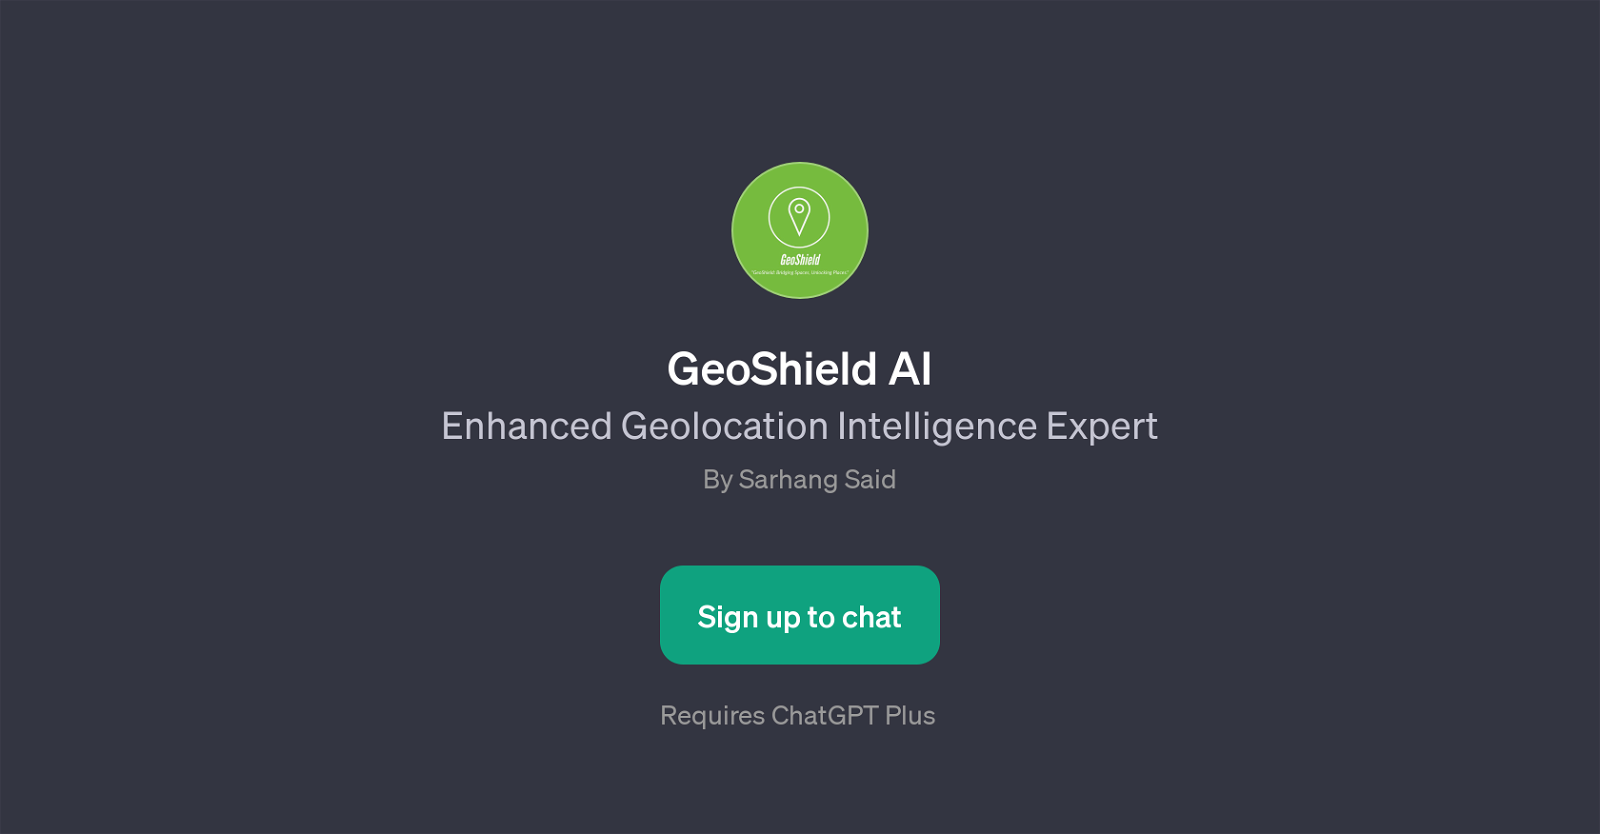 GeoShield AI website